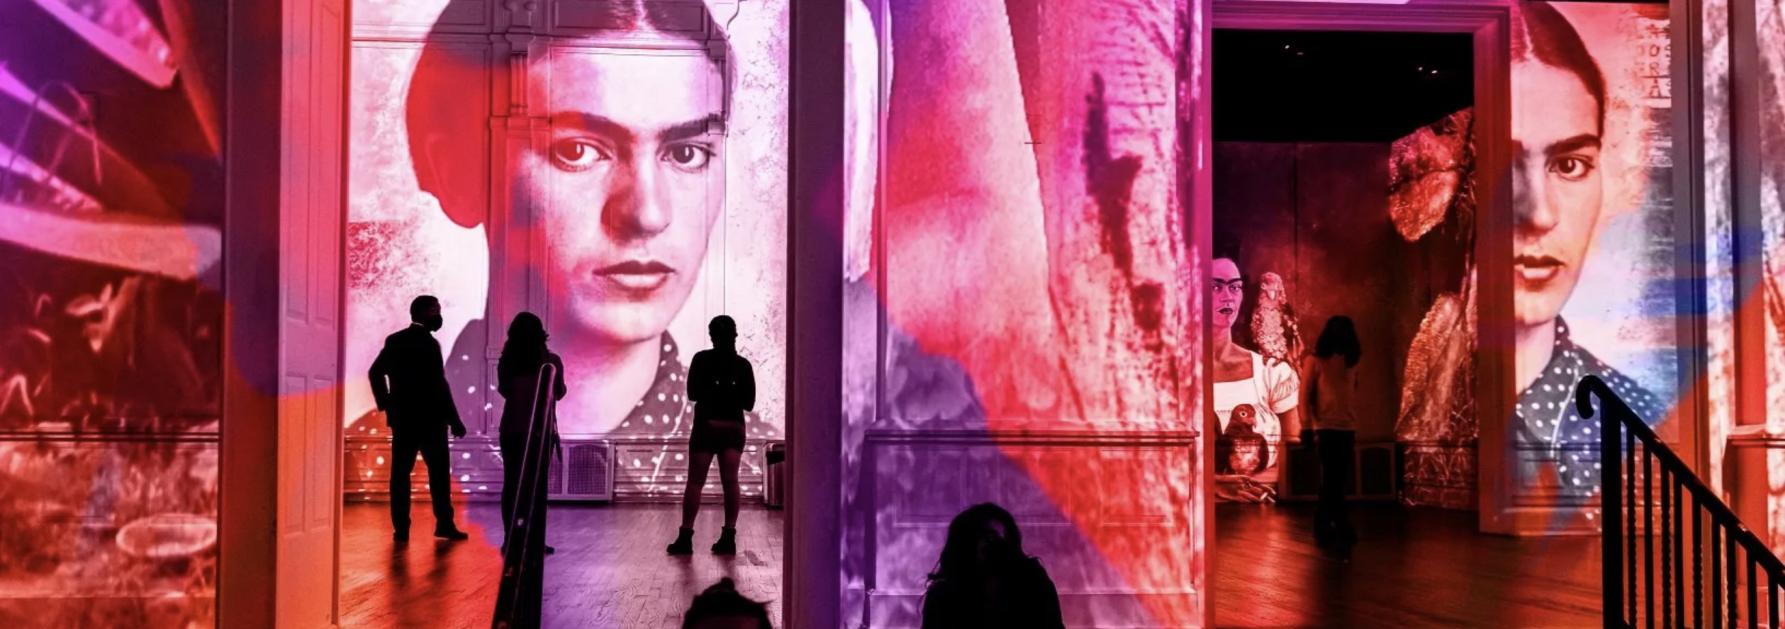 Frida Kahlo Immersive Experience